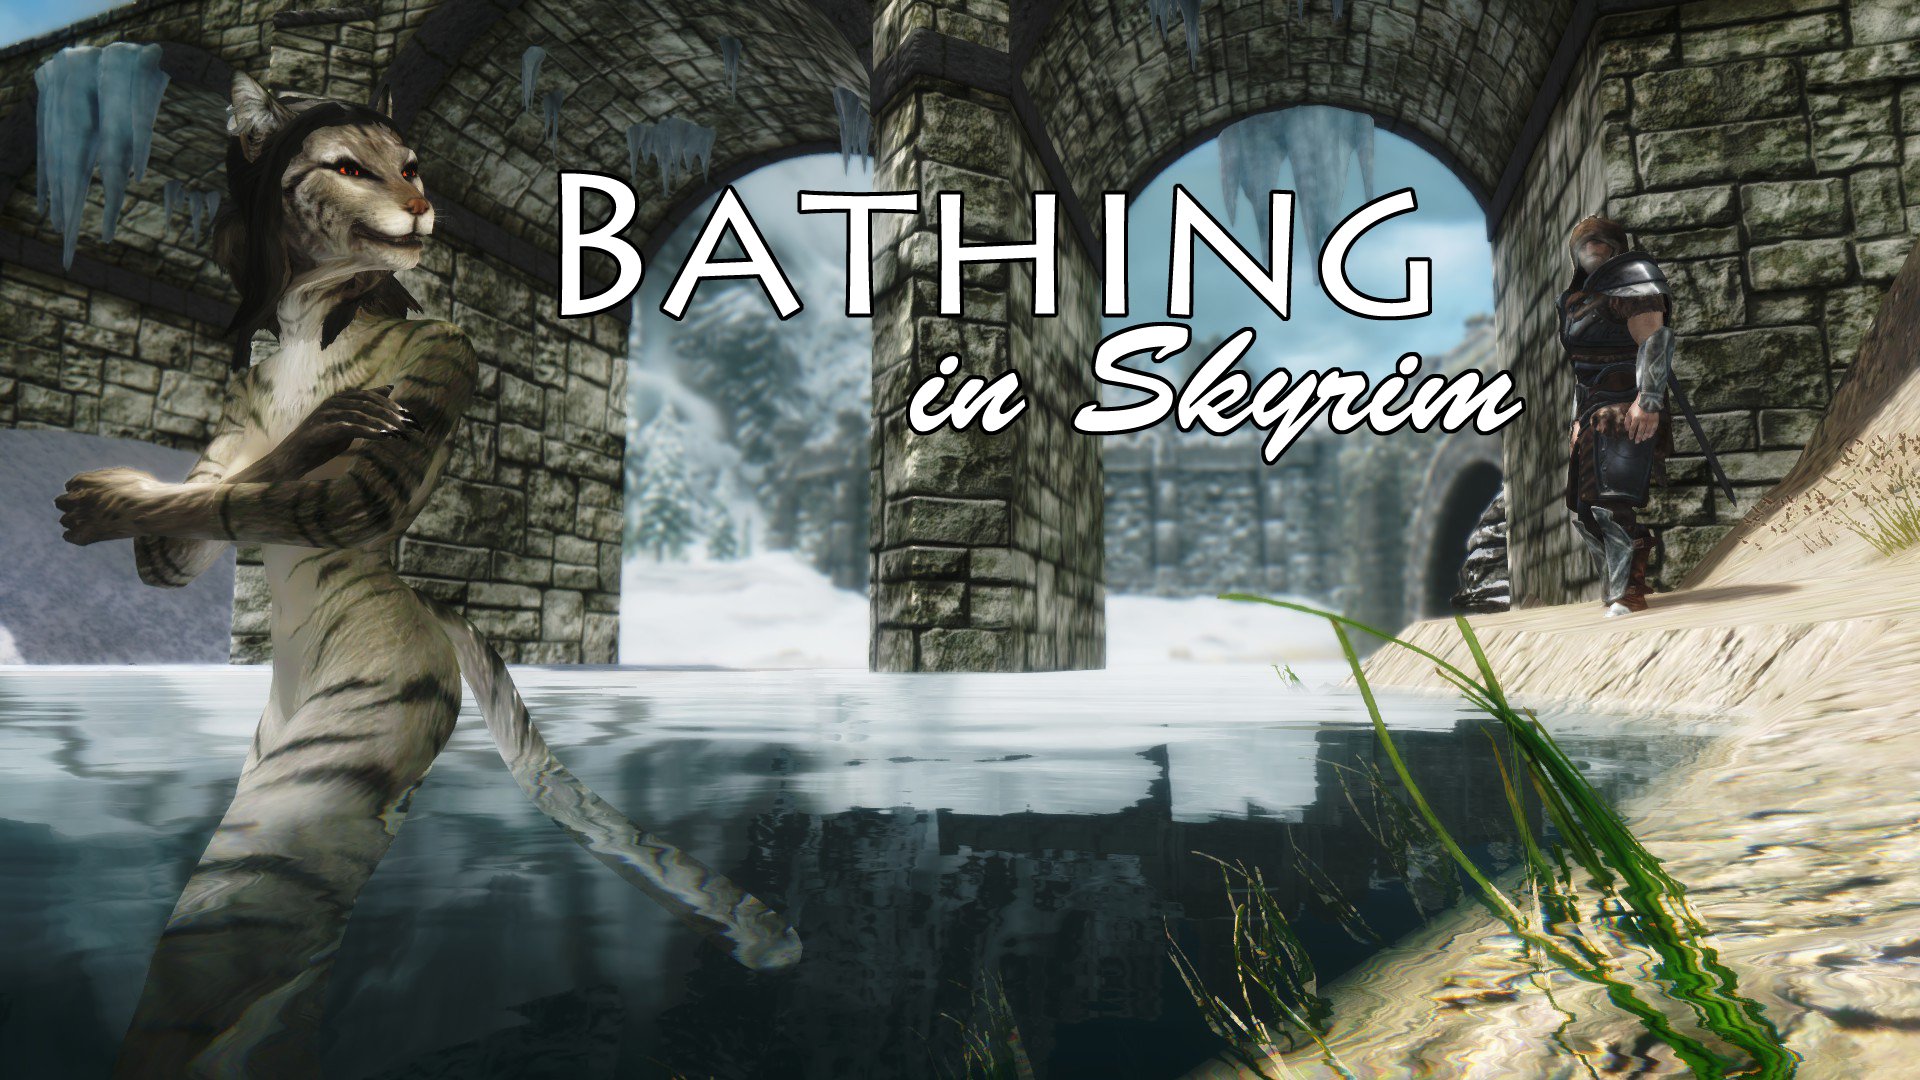 More information about "Bathing in Skyrim Tweaked"